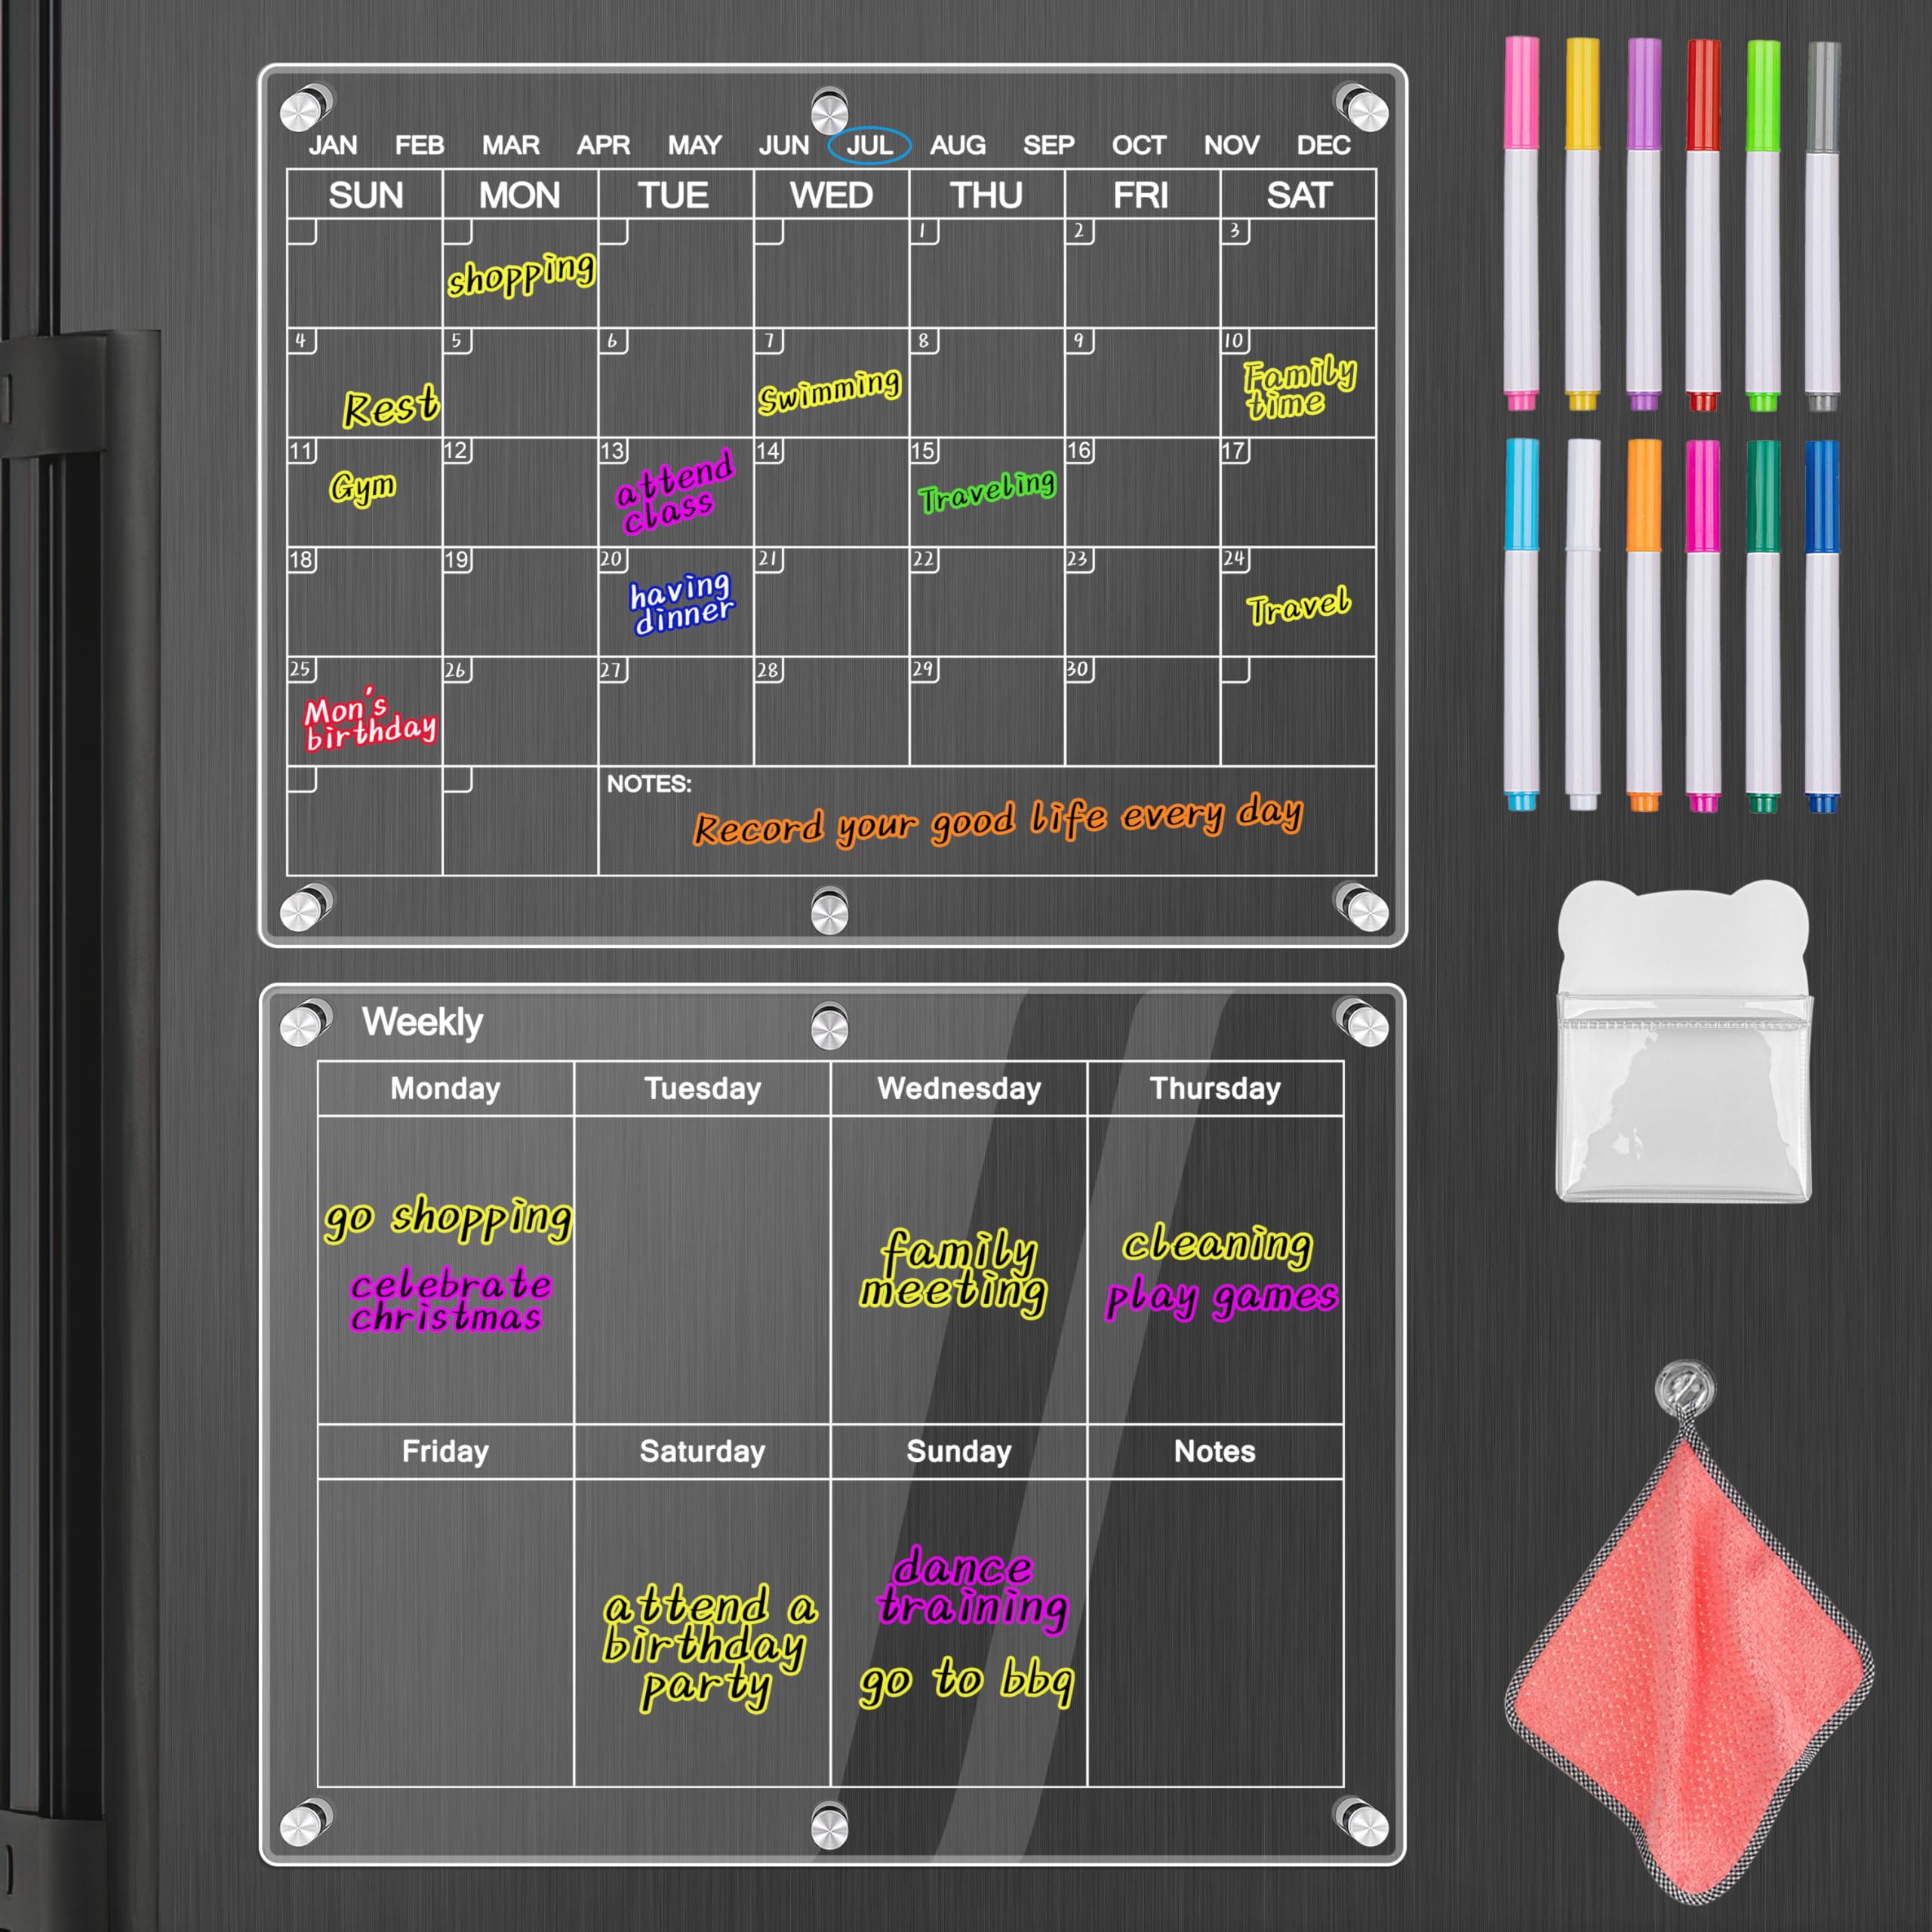 VOgHJA VOG-YK04 Acrylic Calendar for Fridge - 2 Set Magnetic Fridge Calendar  Weekly Board Includes 12 Markers 12 Colors,16x12 Magnetic Calenda